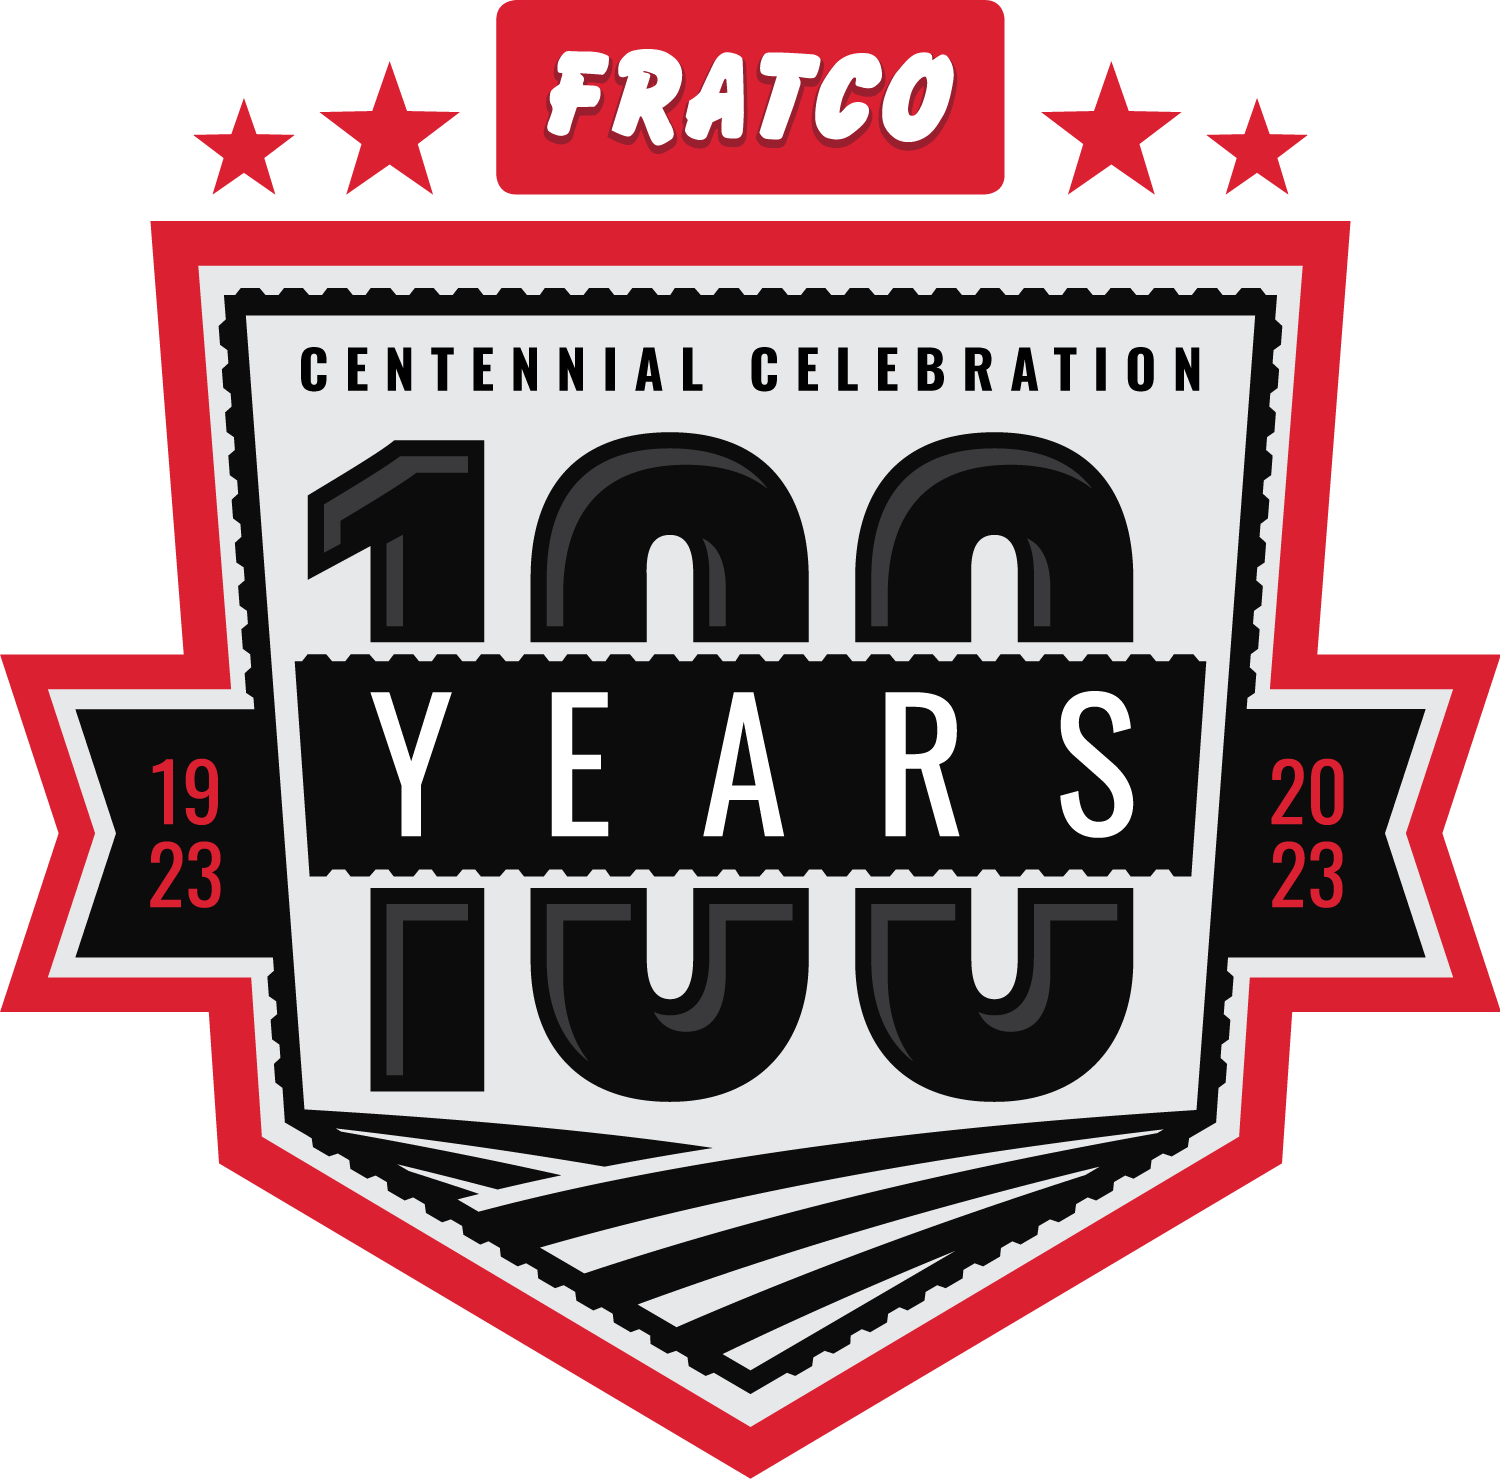 Fratco 100 Years emblem